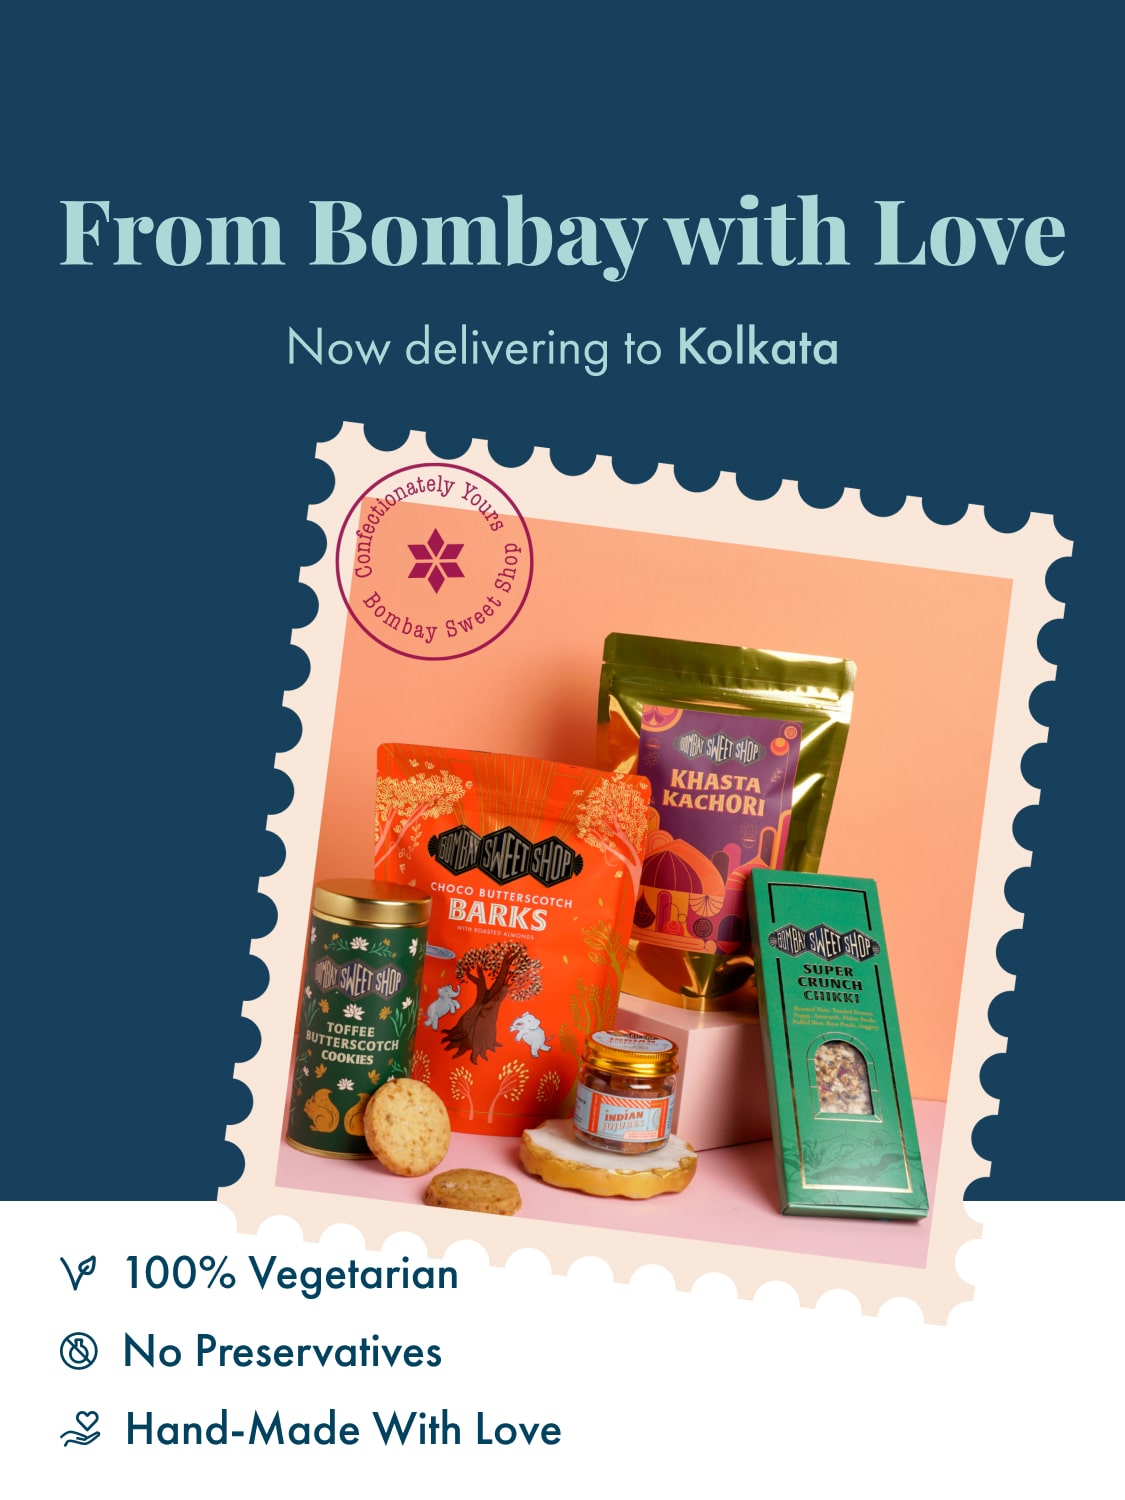 Send gifts To Kolkata - Send Flowers, cakes, sweets, restaurant foods - Gifts  To Kolkata